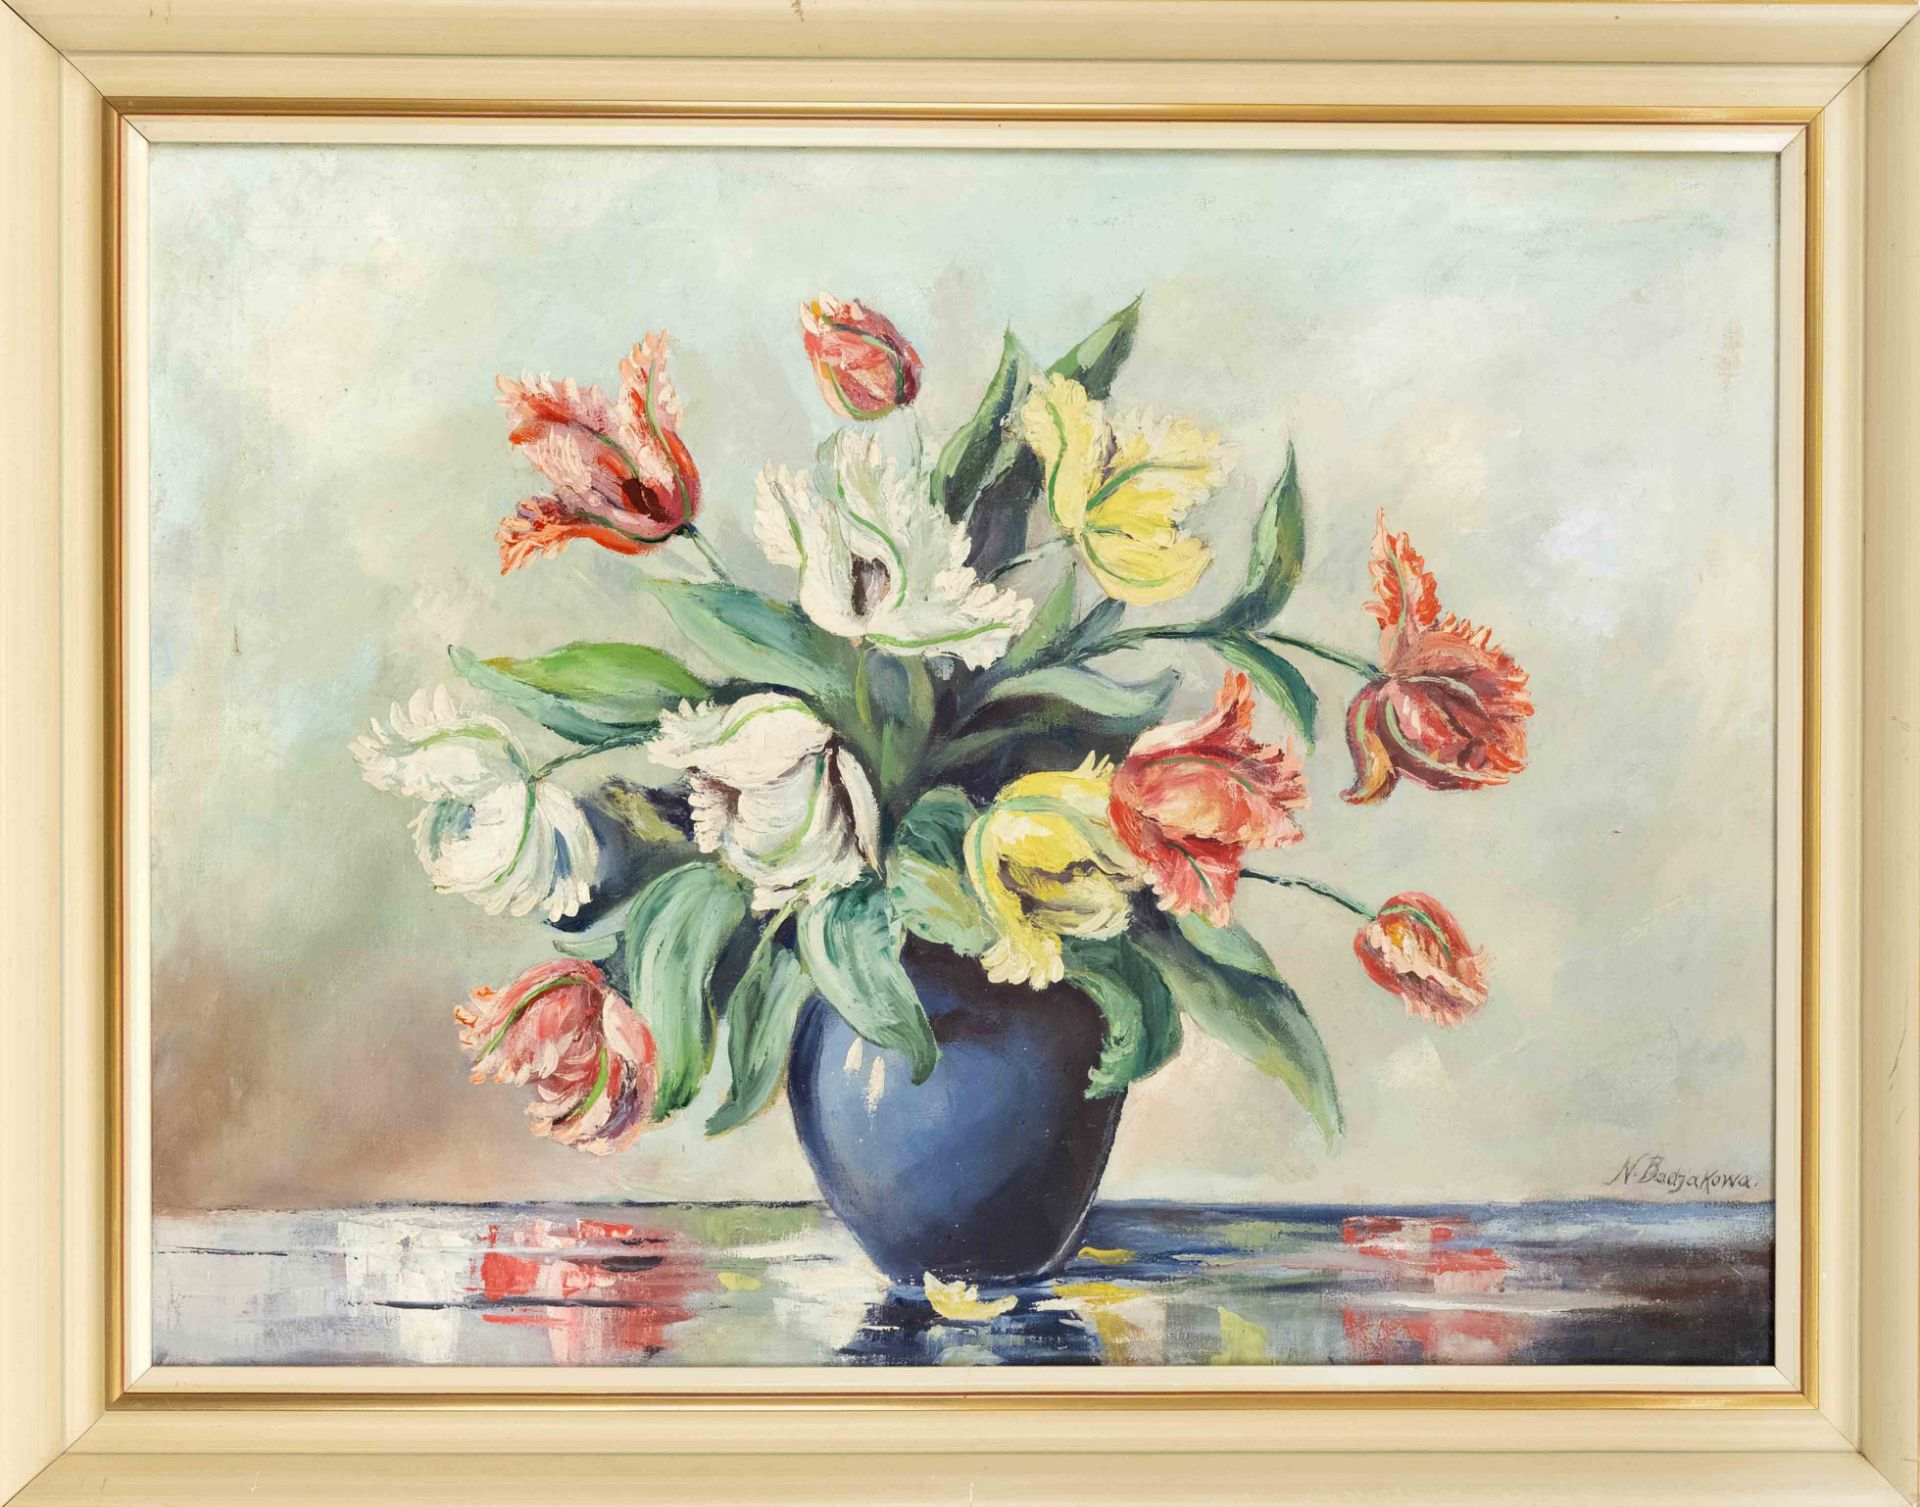 N. Badjakowa, mid-20th century, flower still life, oil on canvas, signed lower right, 60 x 80 cm,